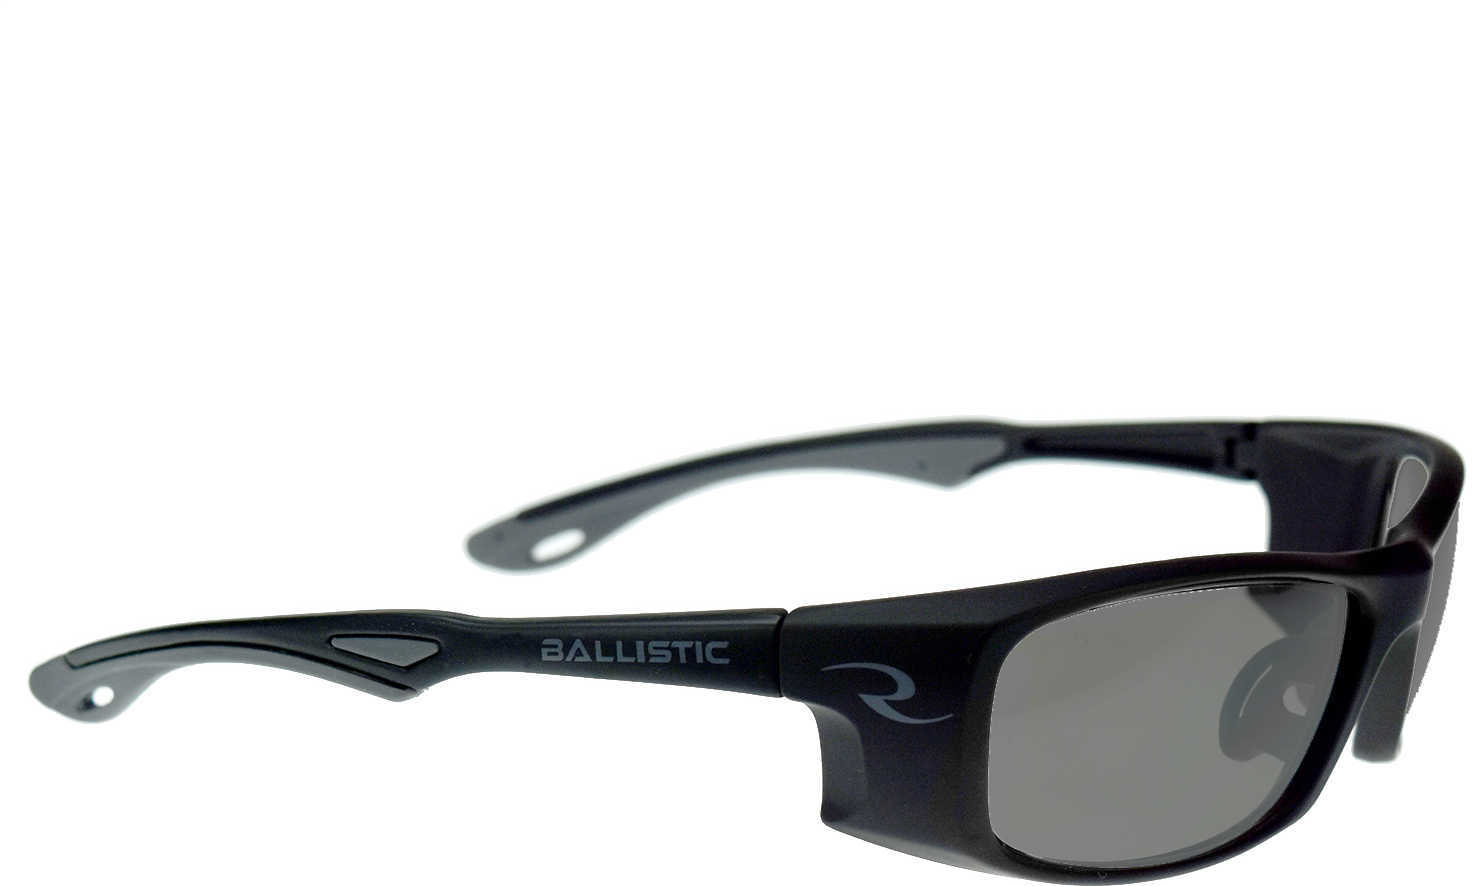 Radians CSB1002BX Bravo Glasses Eye Protection Black Frame Smoke Polycarbonate Lens 1 Pair